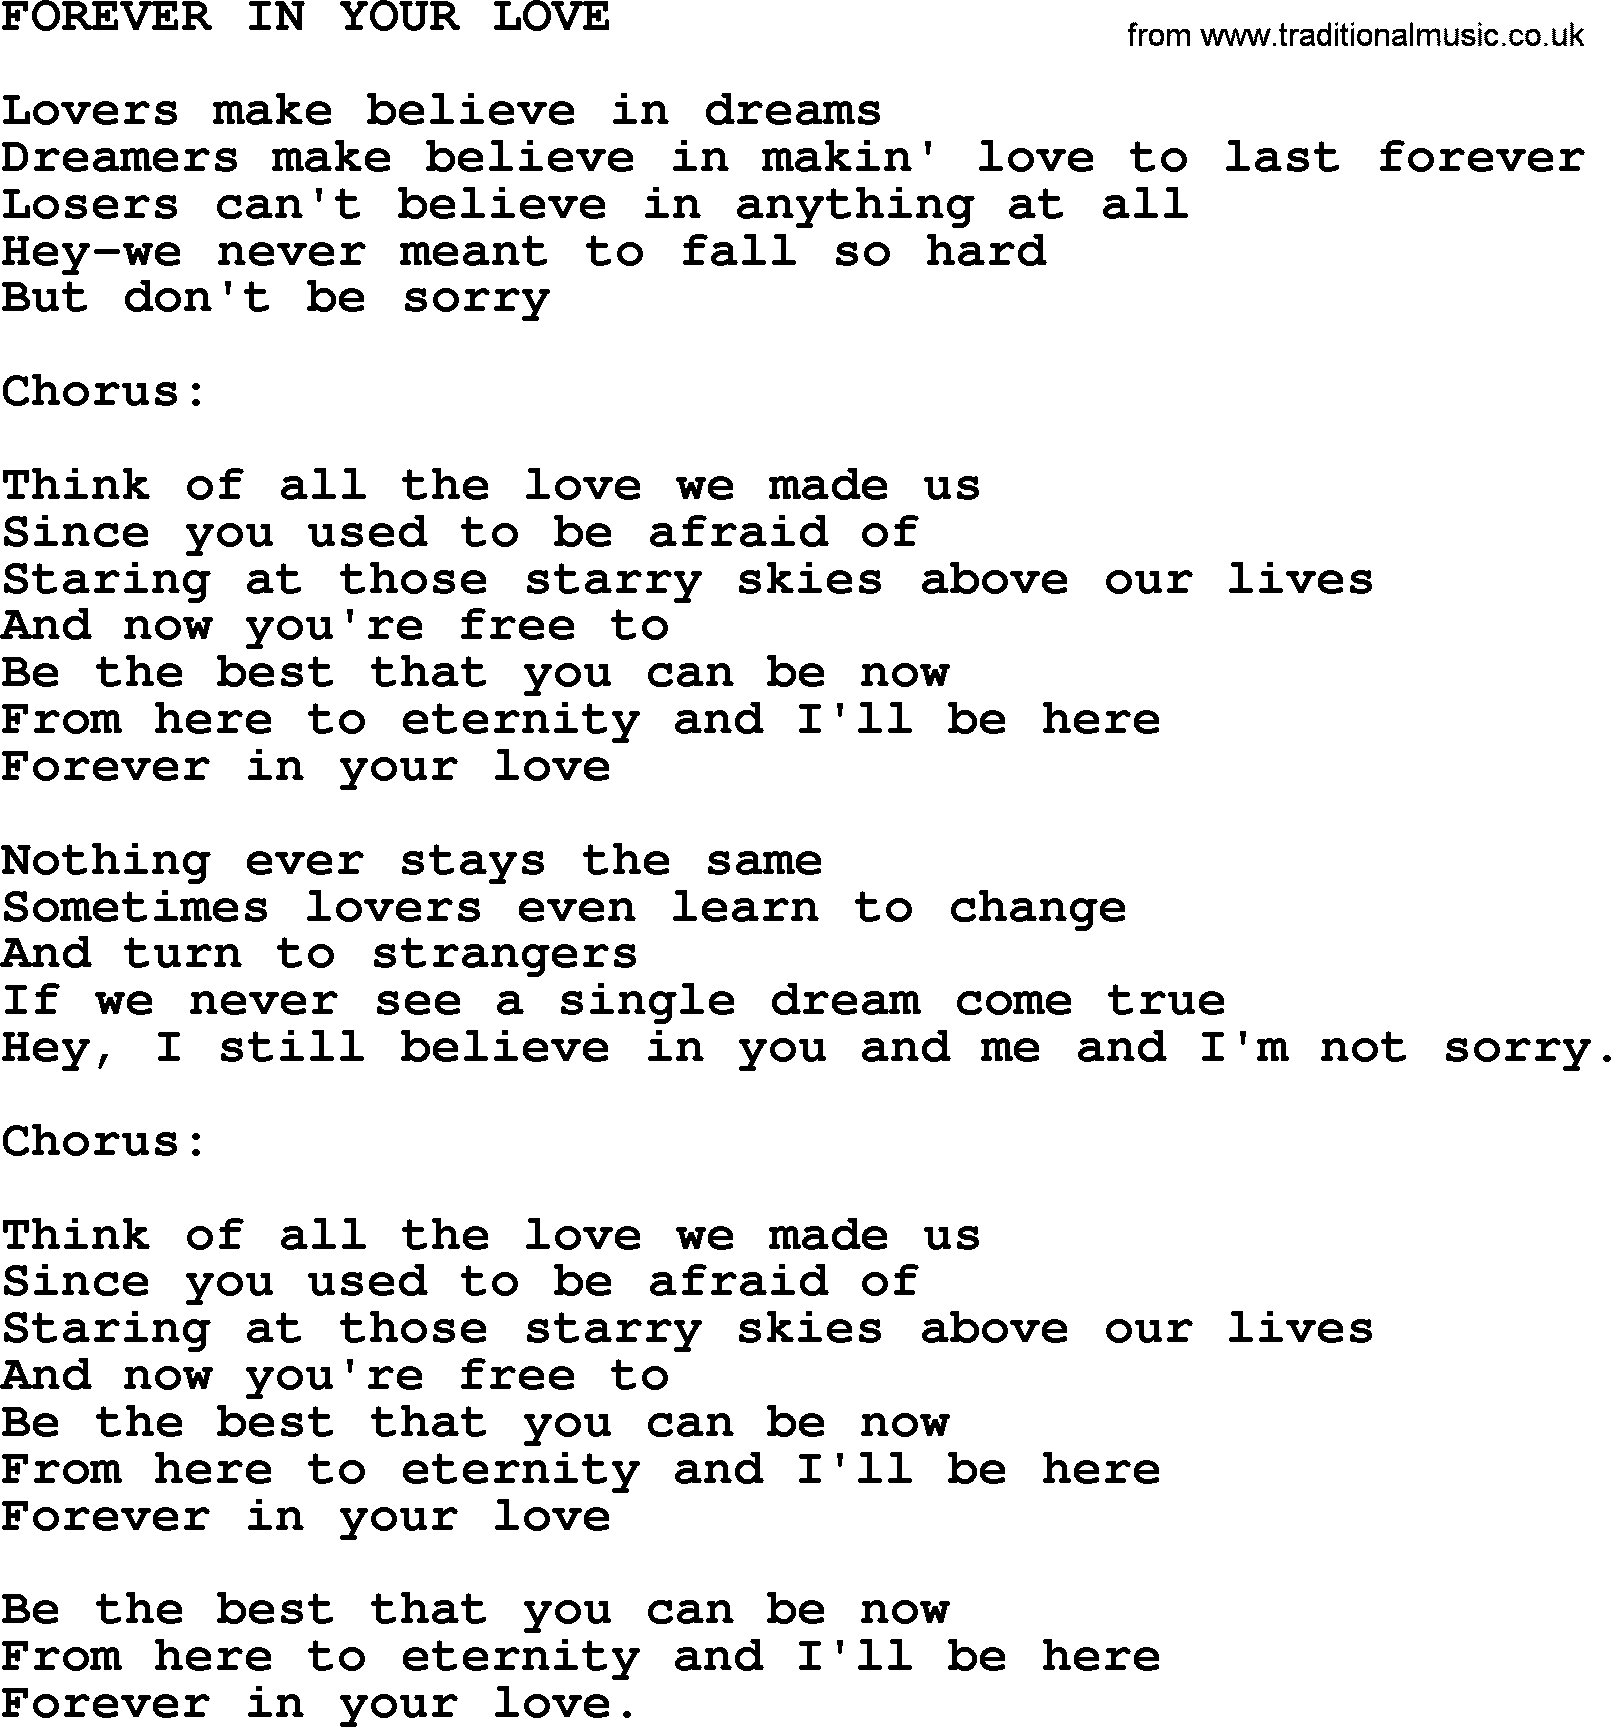 Kris Kristofferson song: Forever In Your Love lyrics